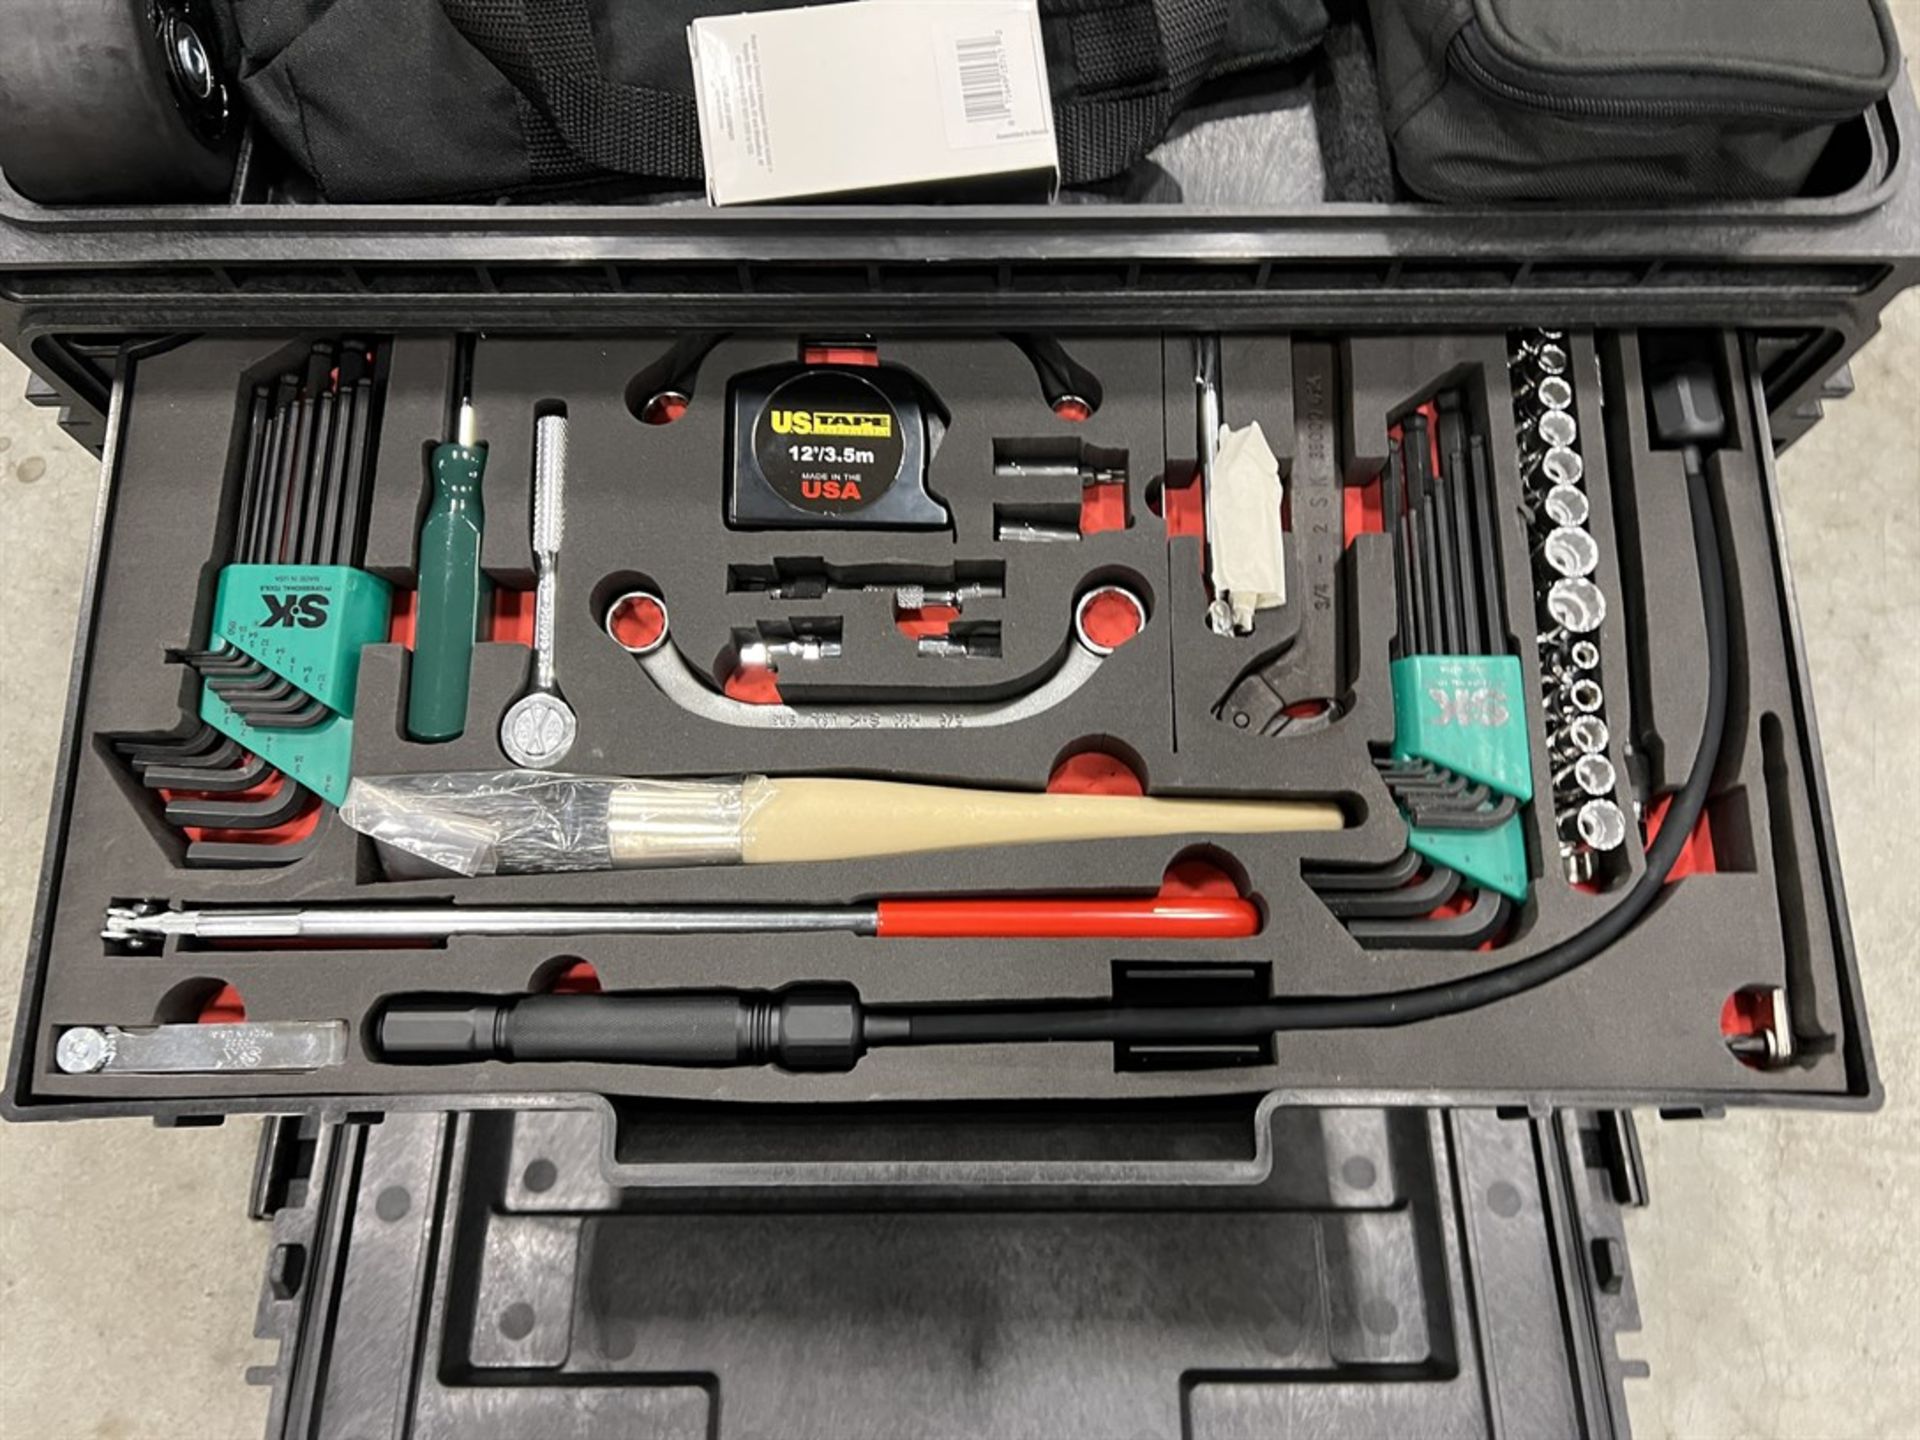 SK TOOL General Mechanics Complete Tool Kit, Including Pelican Case, Sockets, Rachets, Key Set, - Image 5 of 11